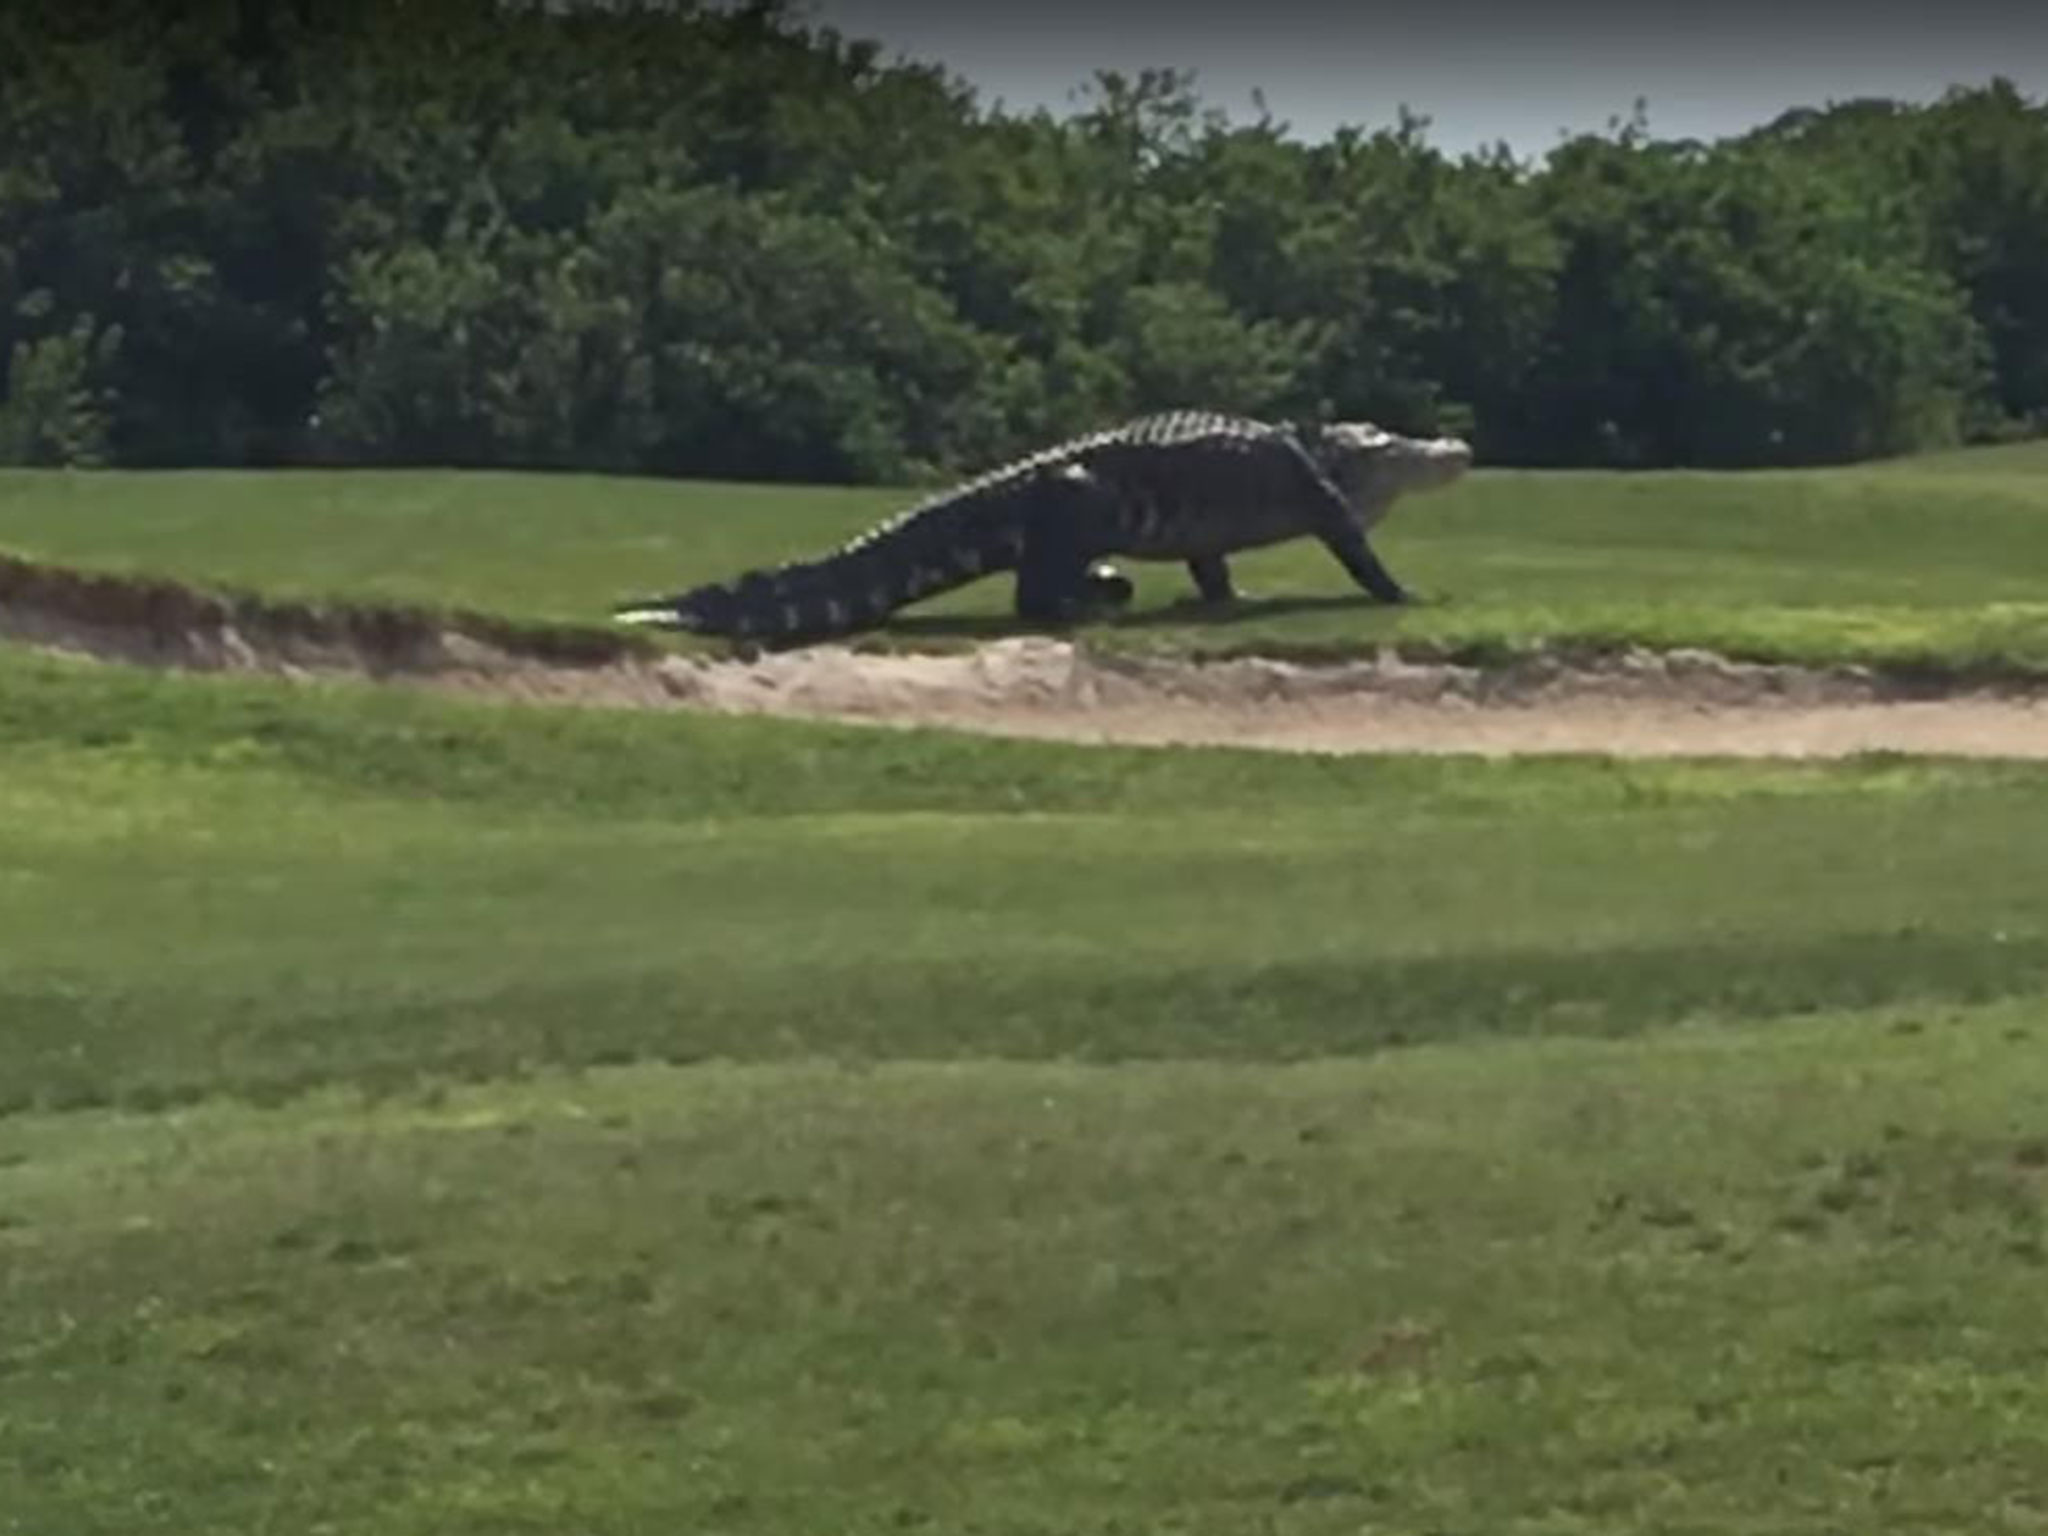 Monster' alligator filmed strolling around golf course in Florida ...